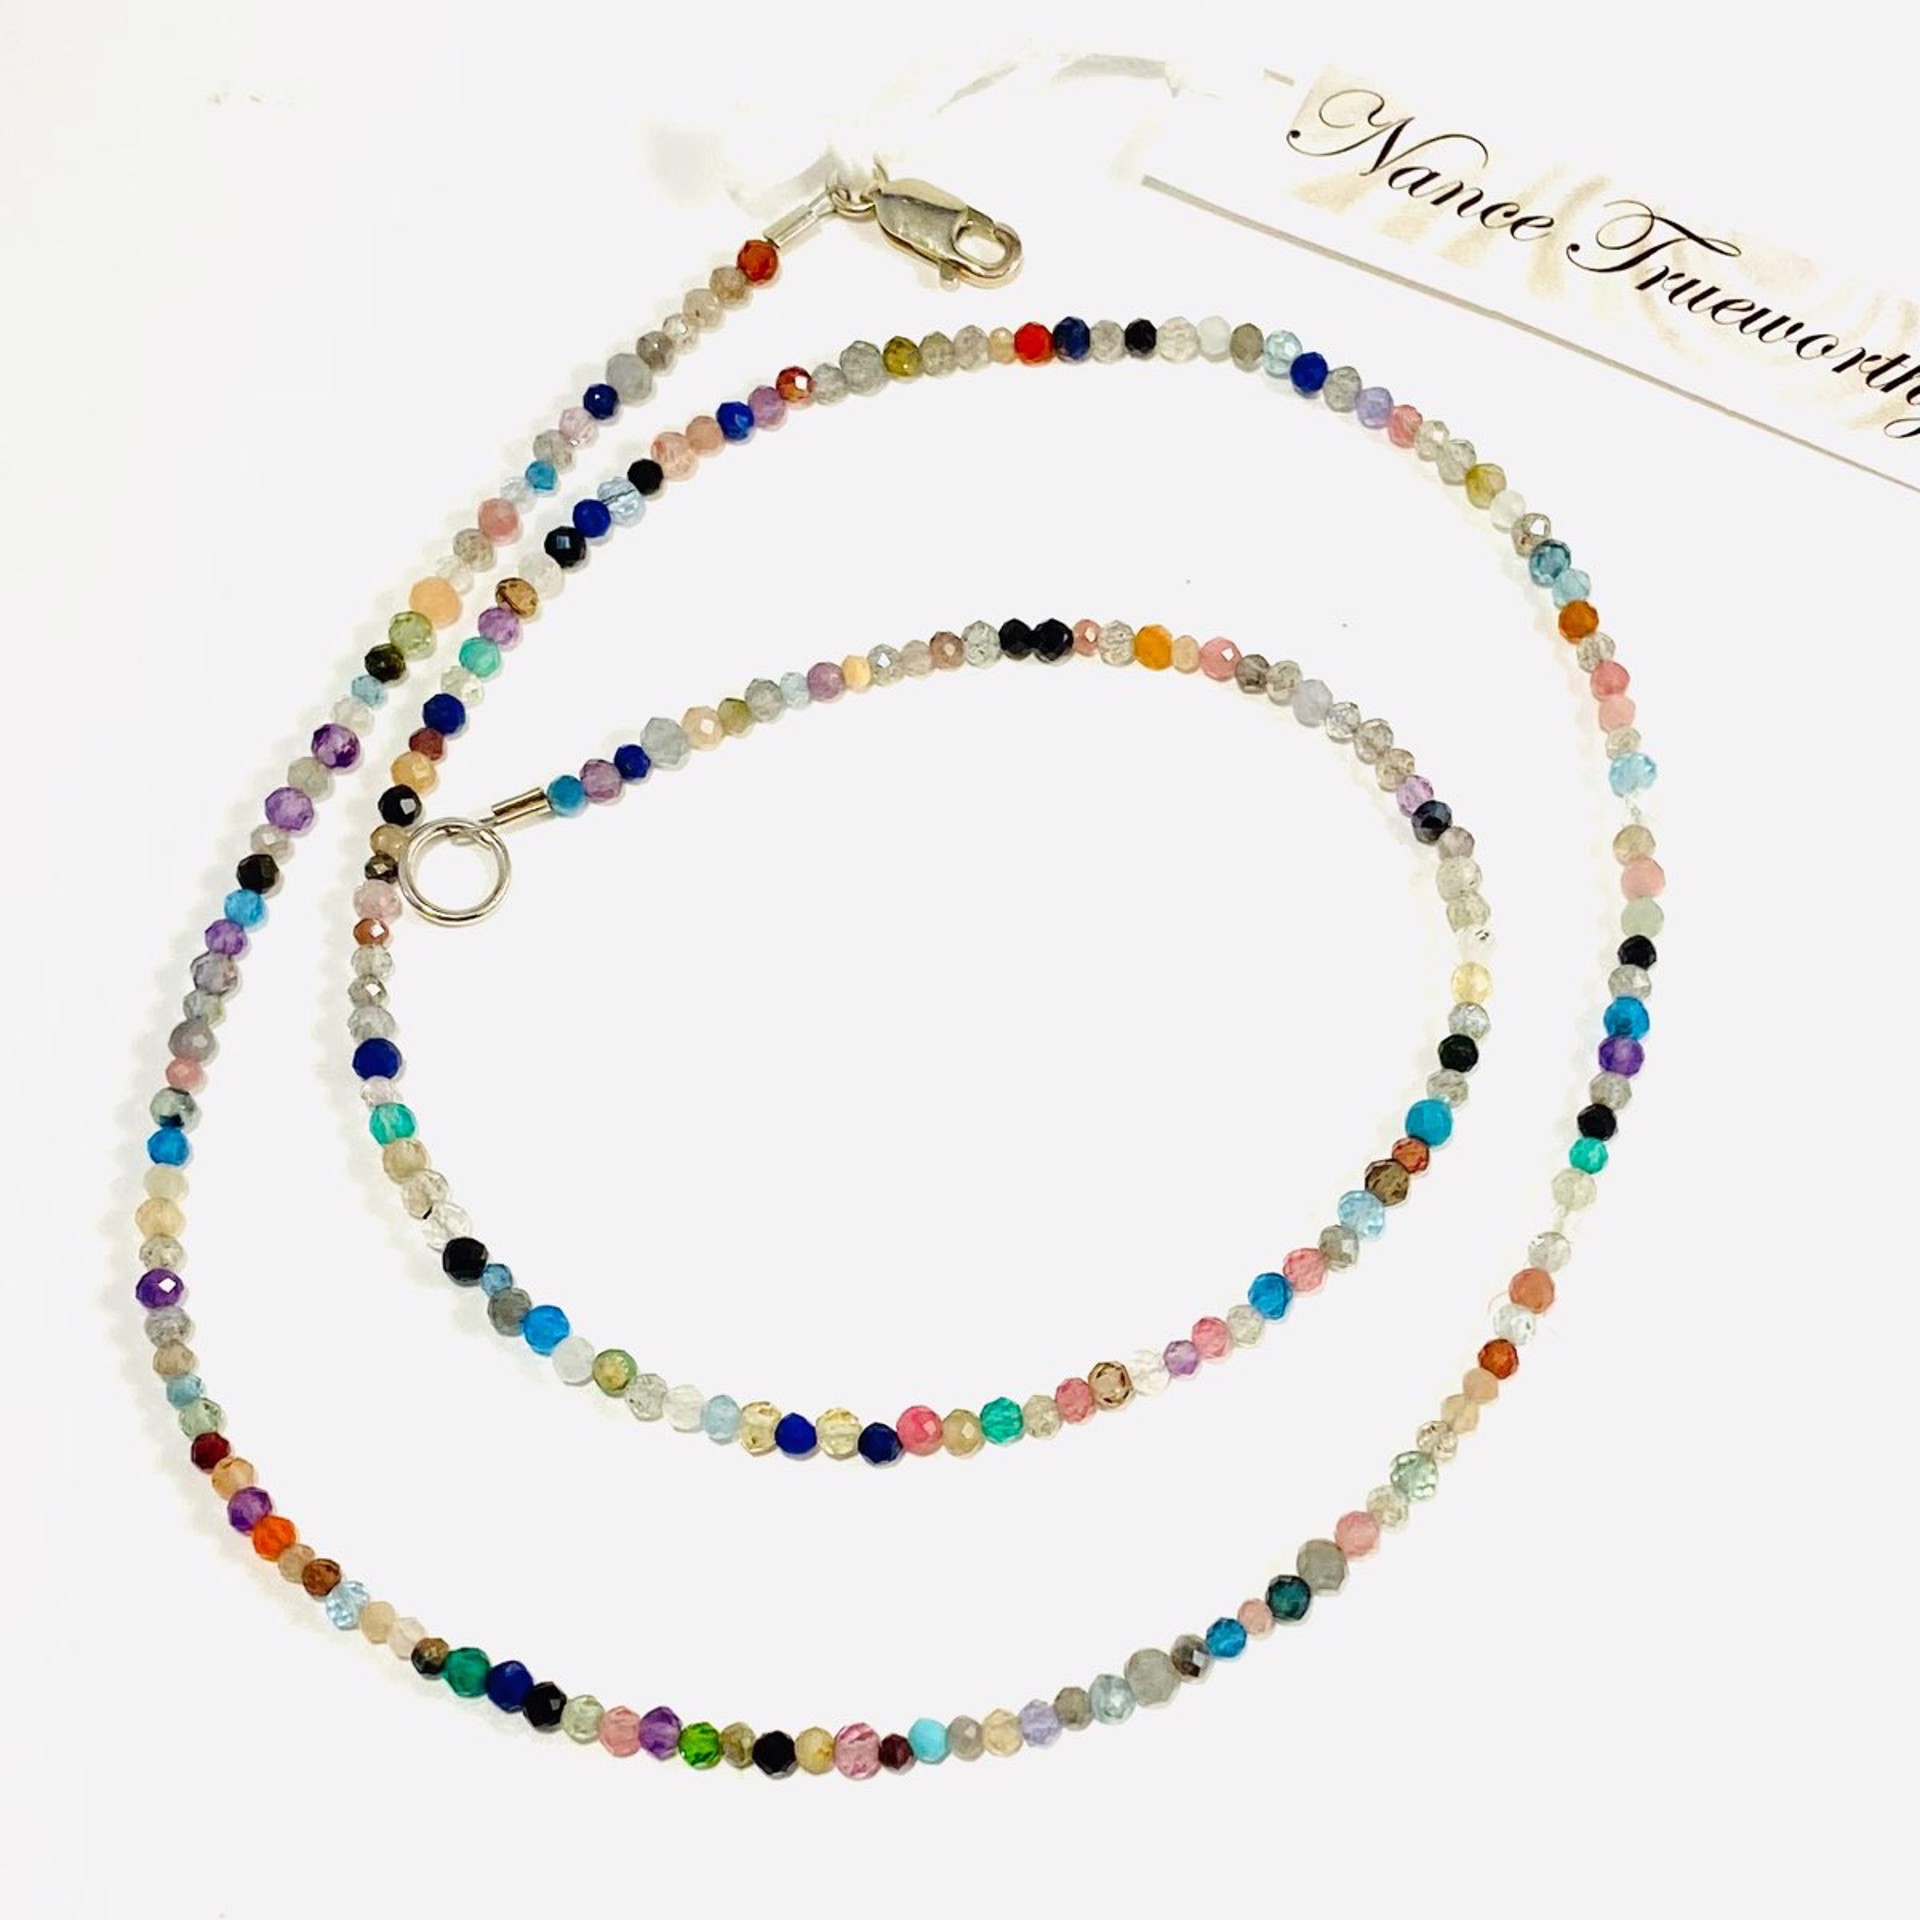 NT22-146 Tiny Multi Color Gemstone Strand Necklace by Nance Trueworthy